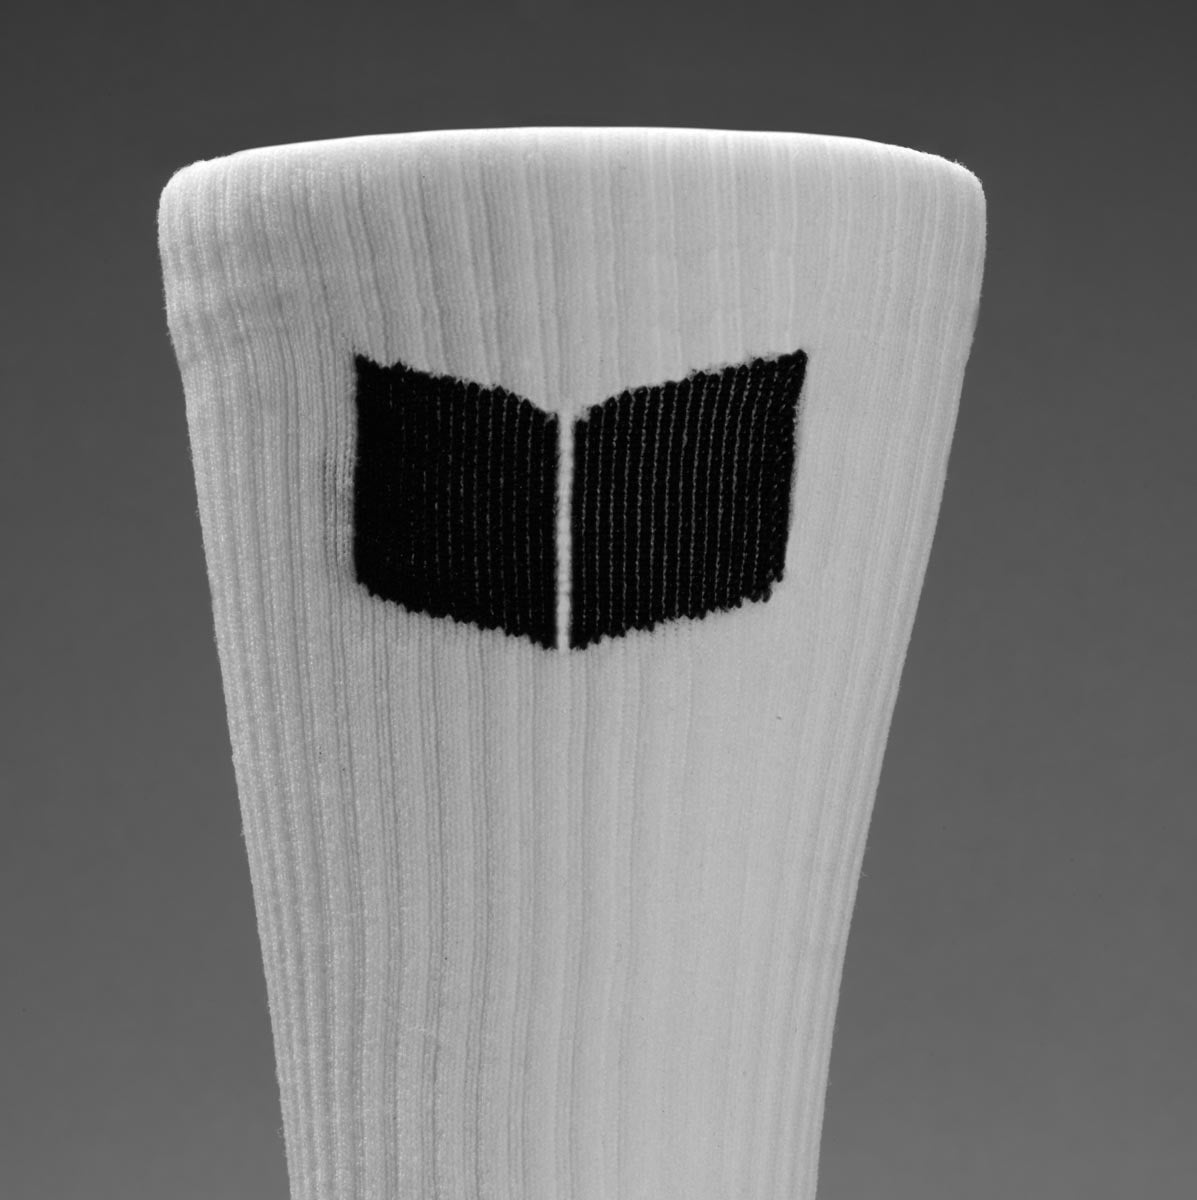 Kane Structure Ankle Socks- White – Kane Footwear